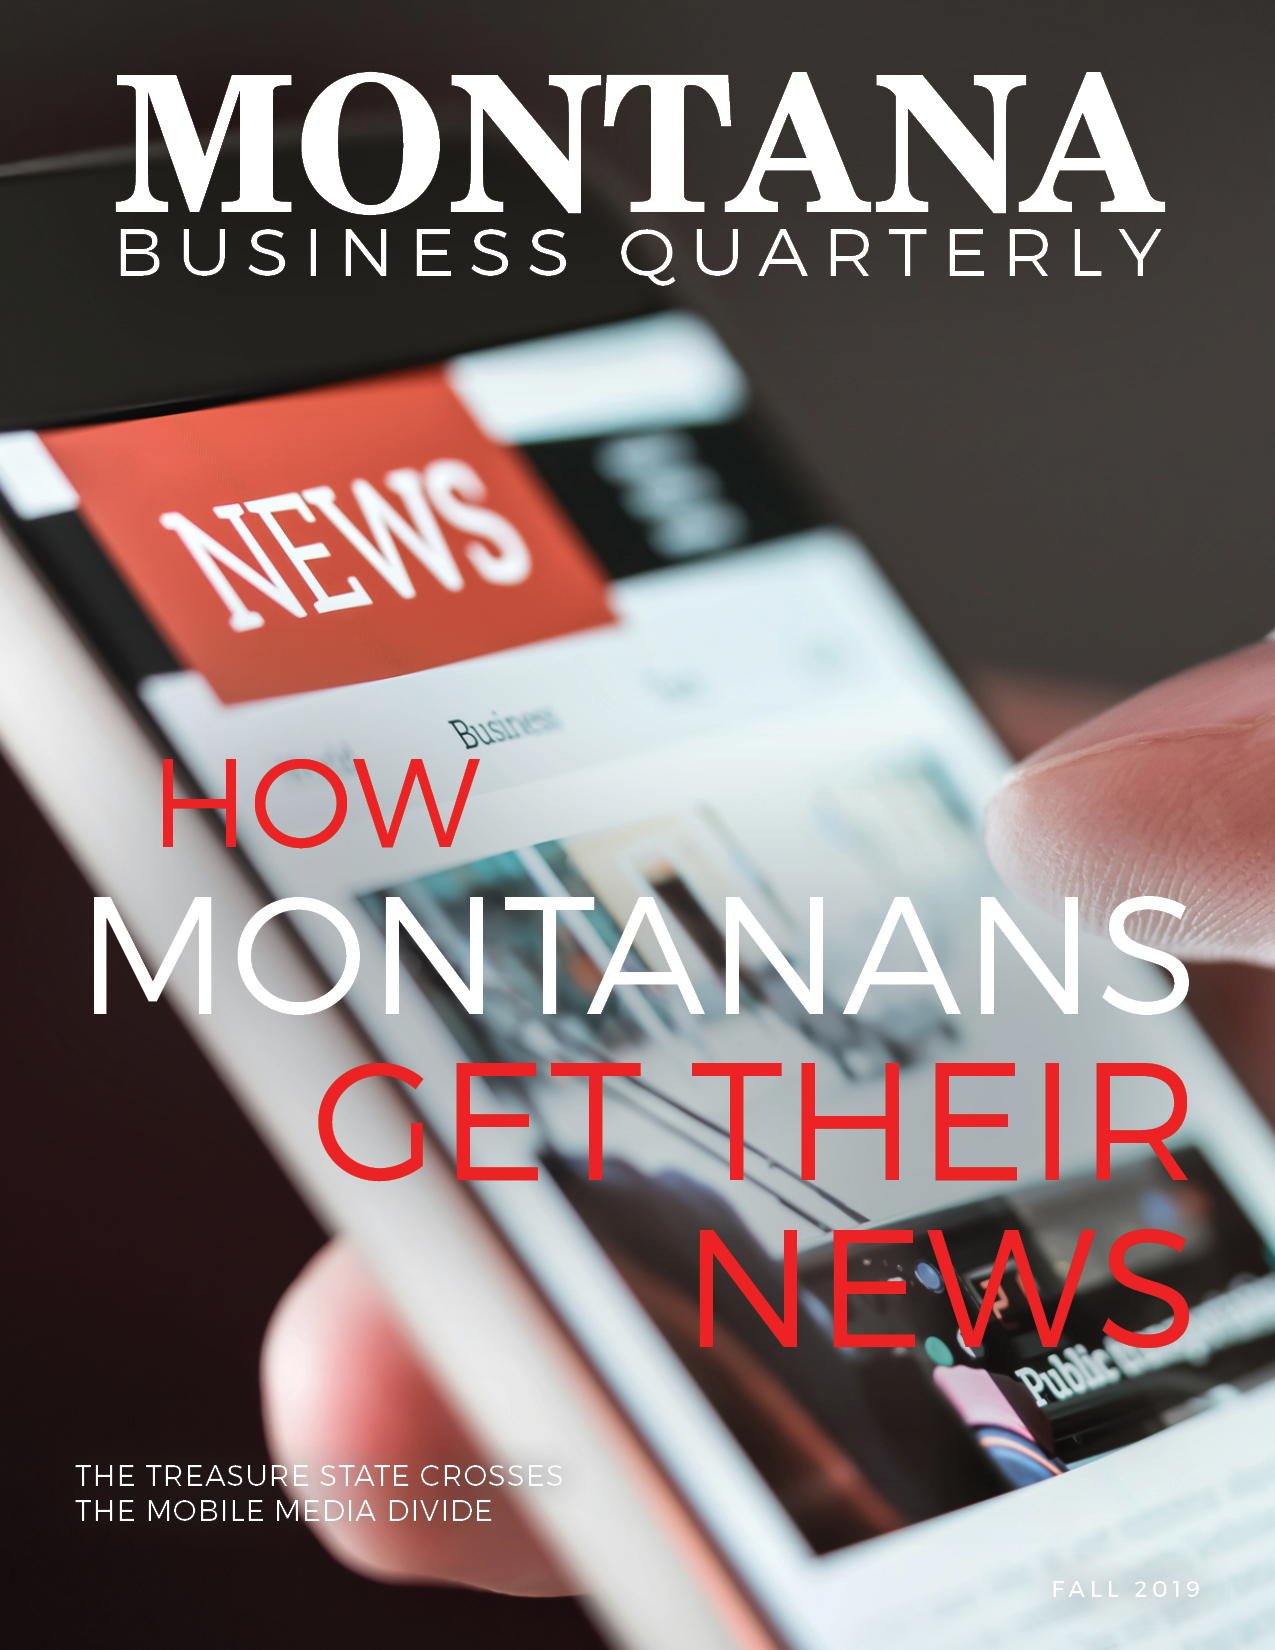 Montana Free Press: Blackfeet Reservation businesses ask Bullock for help